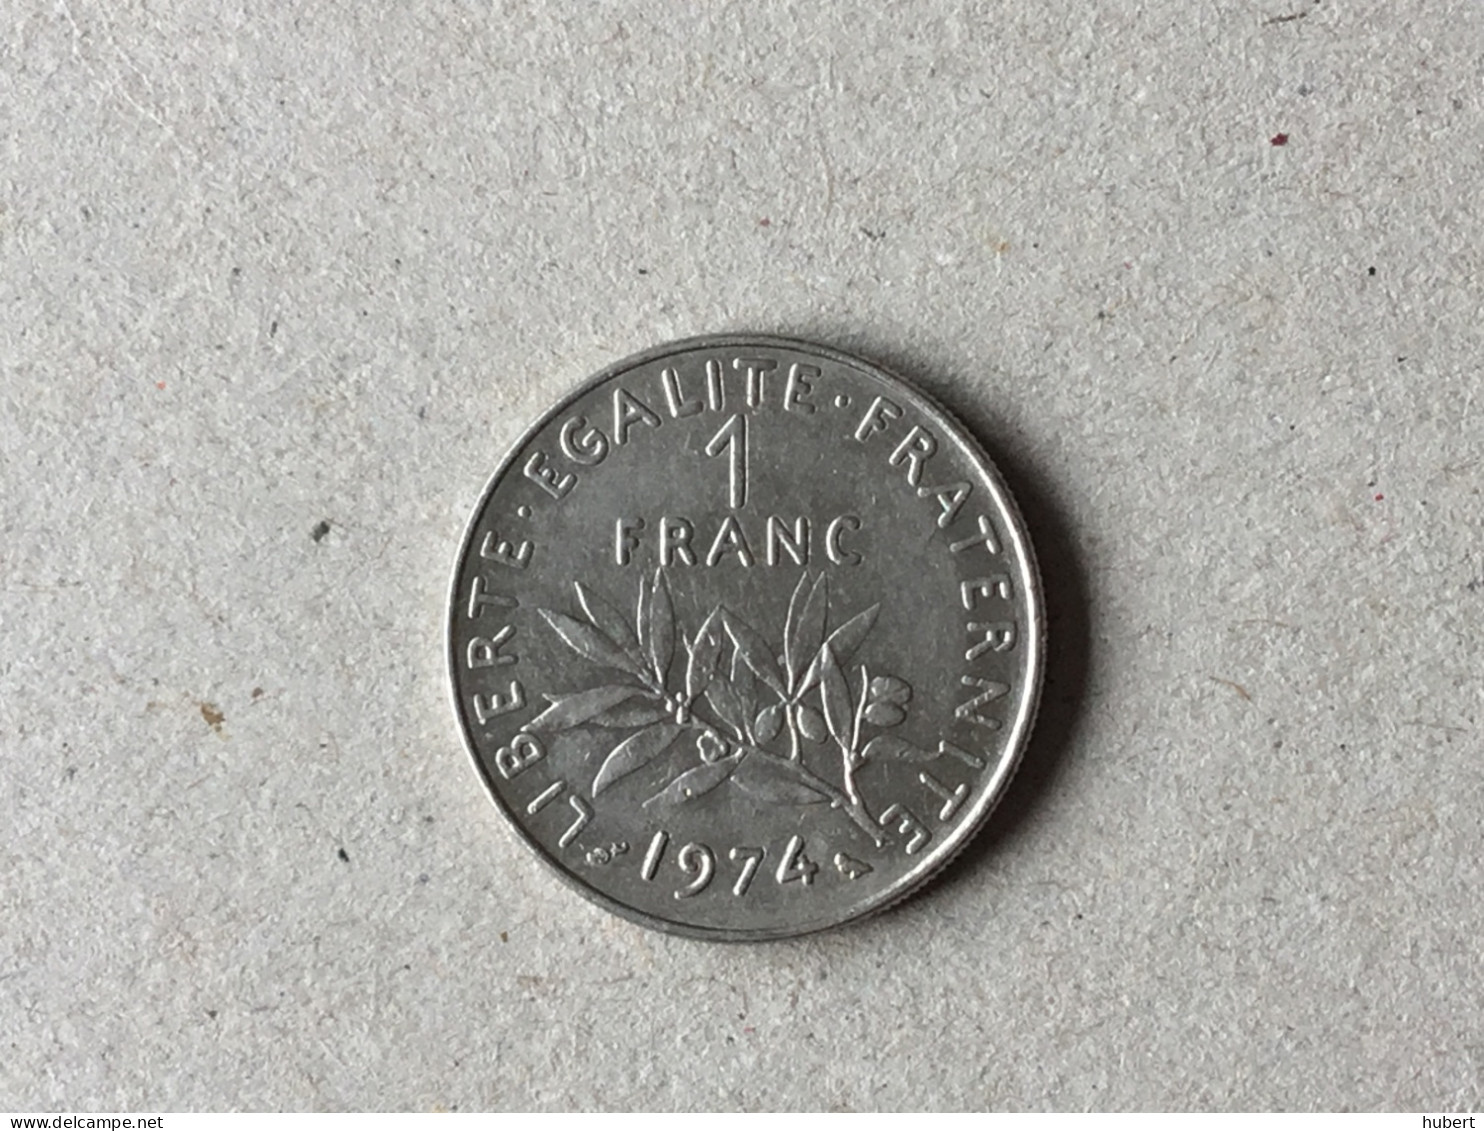 France 1 Franc 1974 - 1 Franc